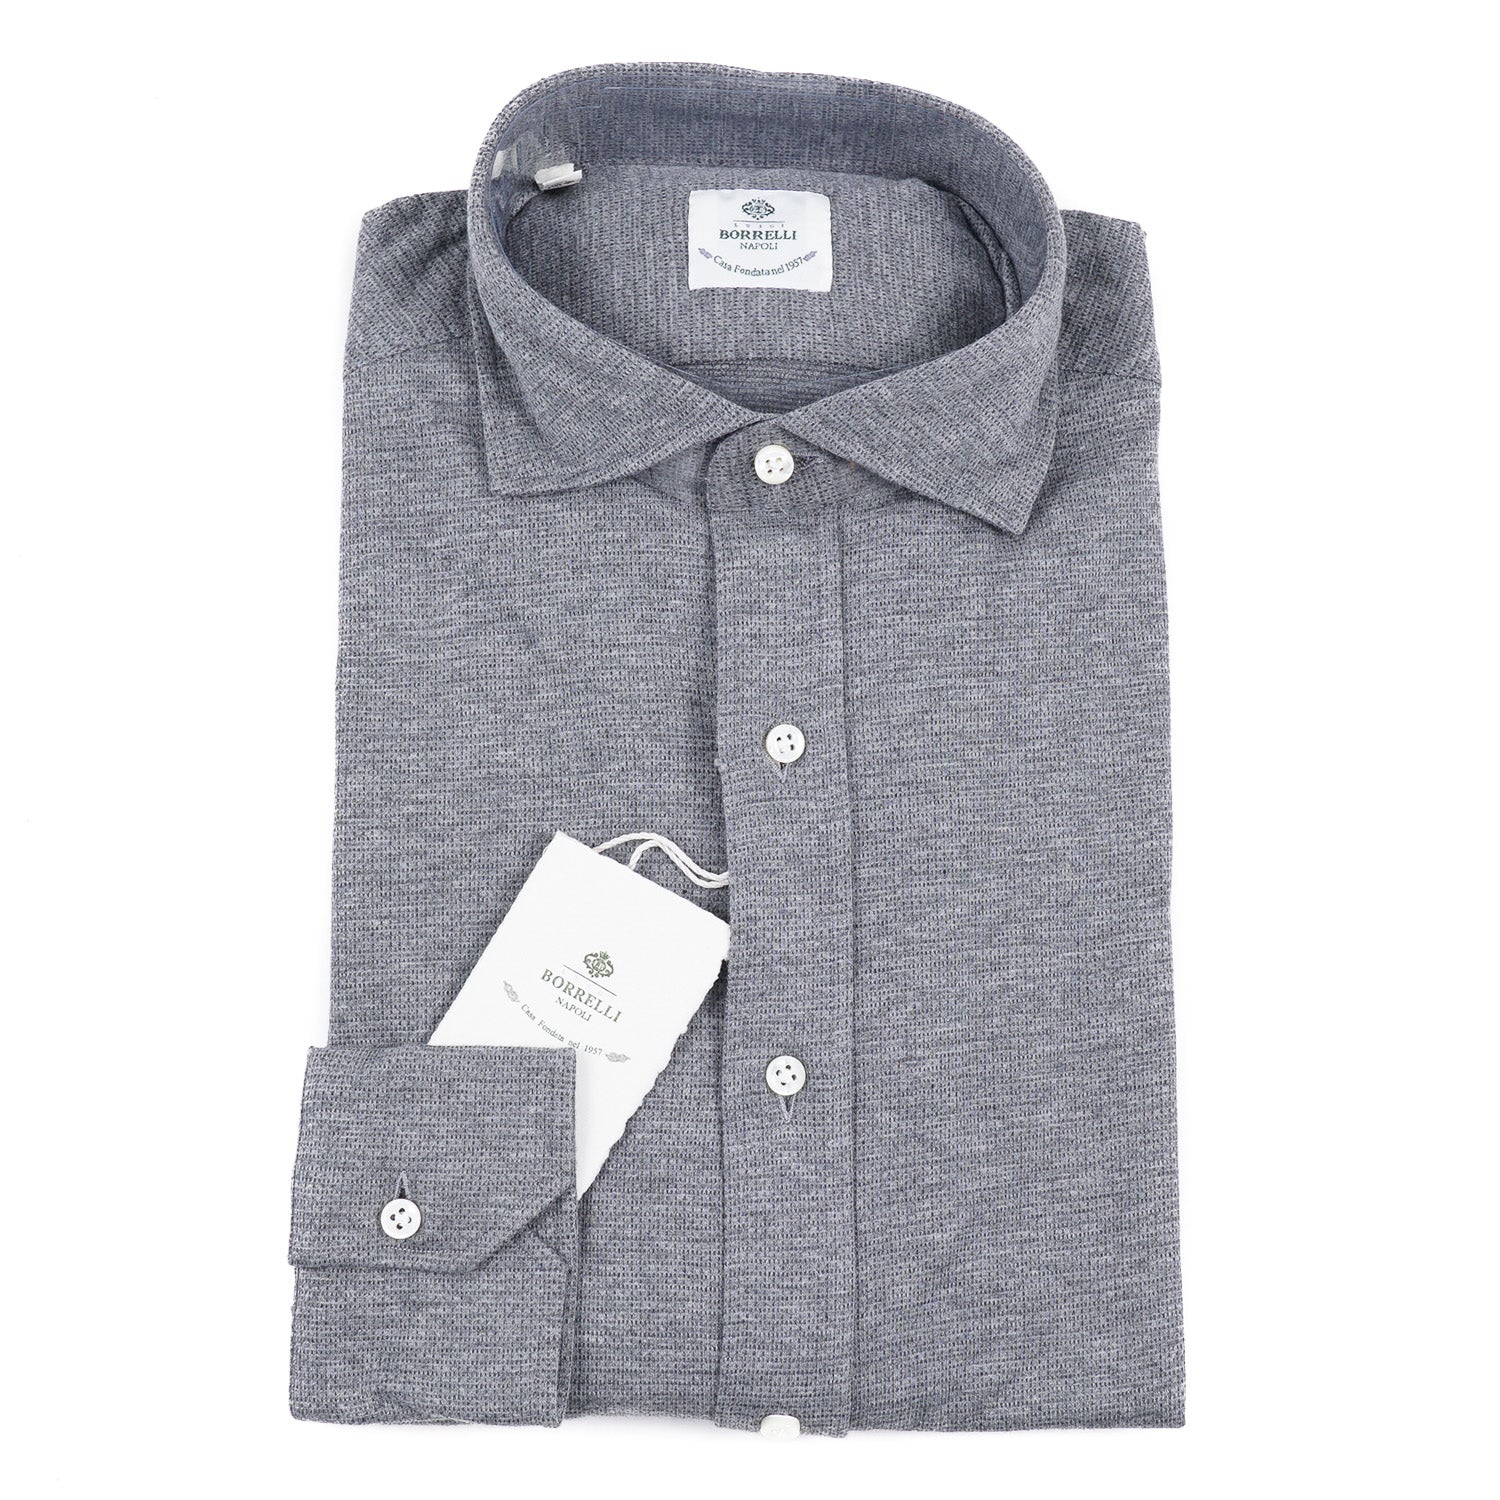 Luigi Borrelli Soft-Knit Cotton Shirt - Top Shelf Apparel